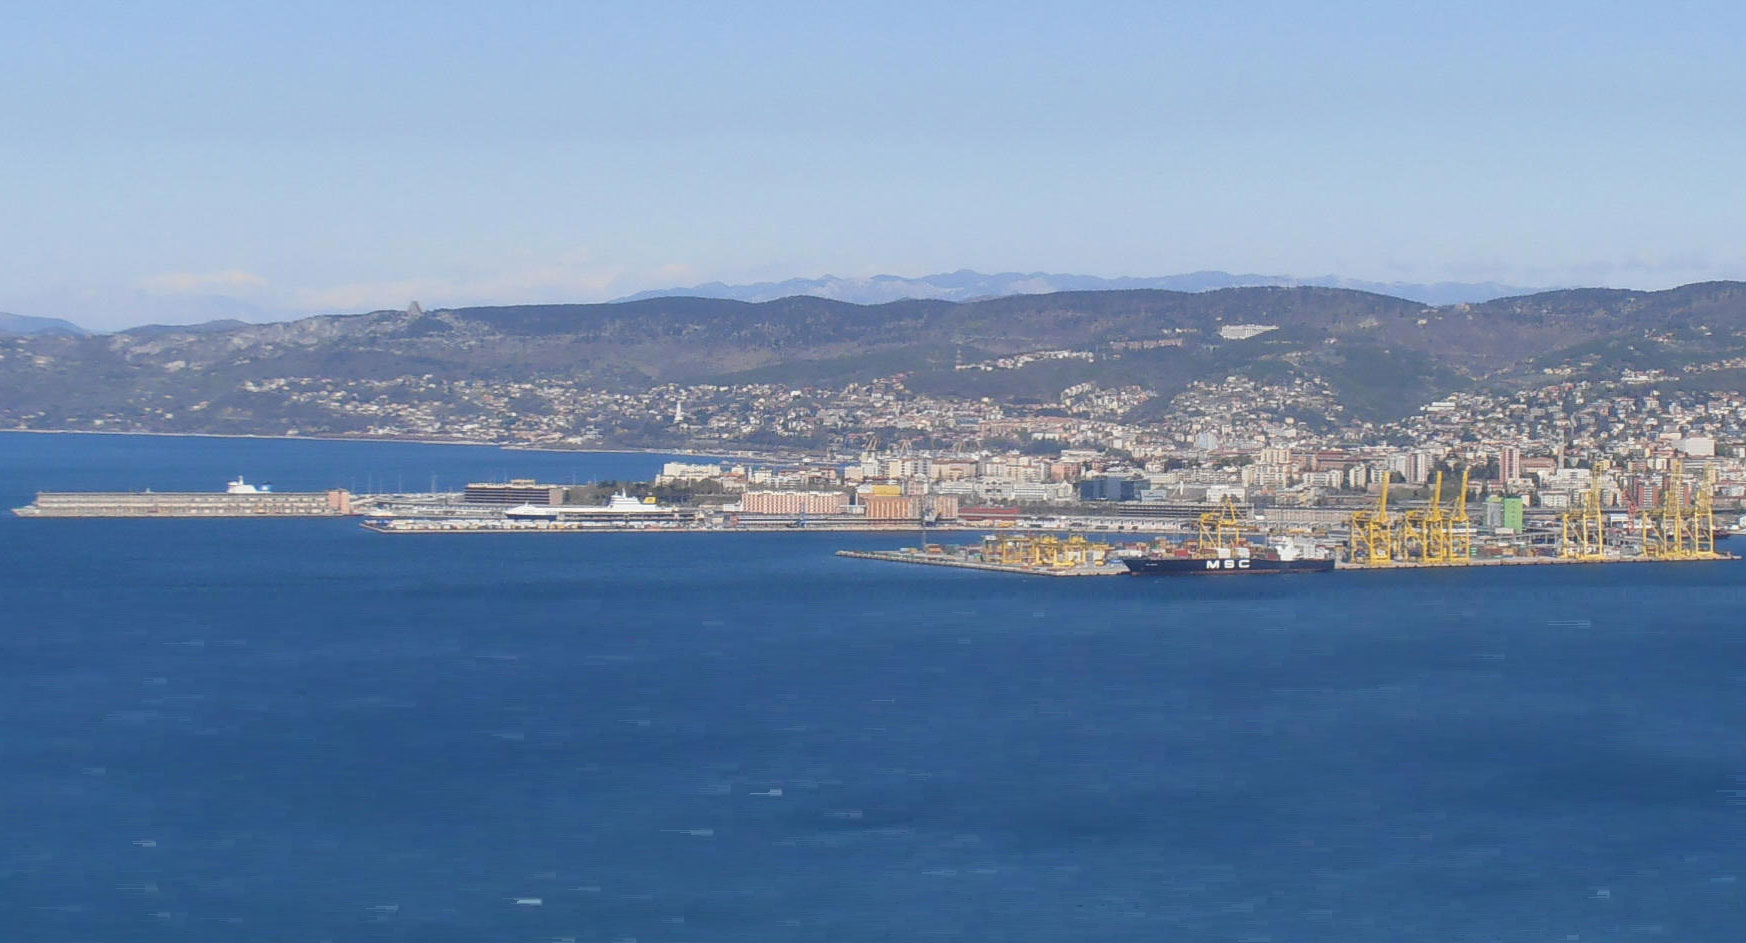 Porto di Trieste - panorama